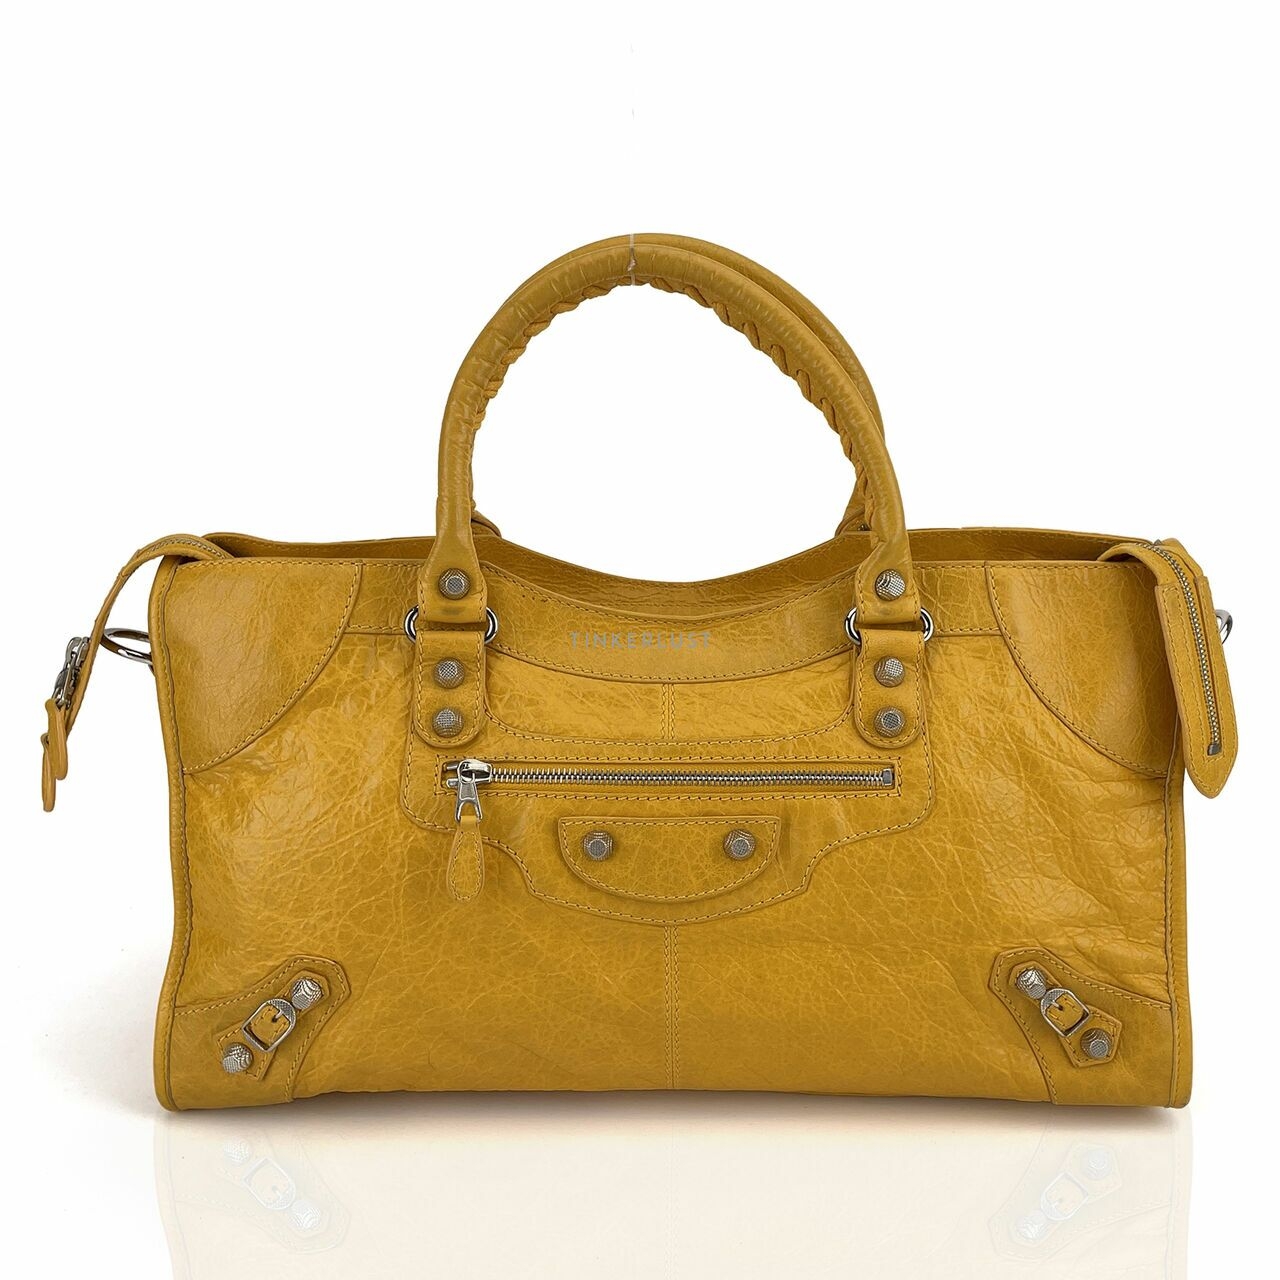 Balenciaga Giant Part Time Yellow Satchel Bag